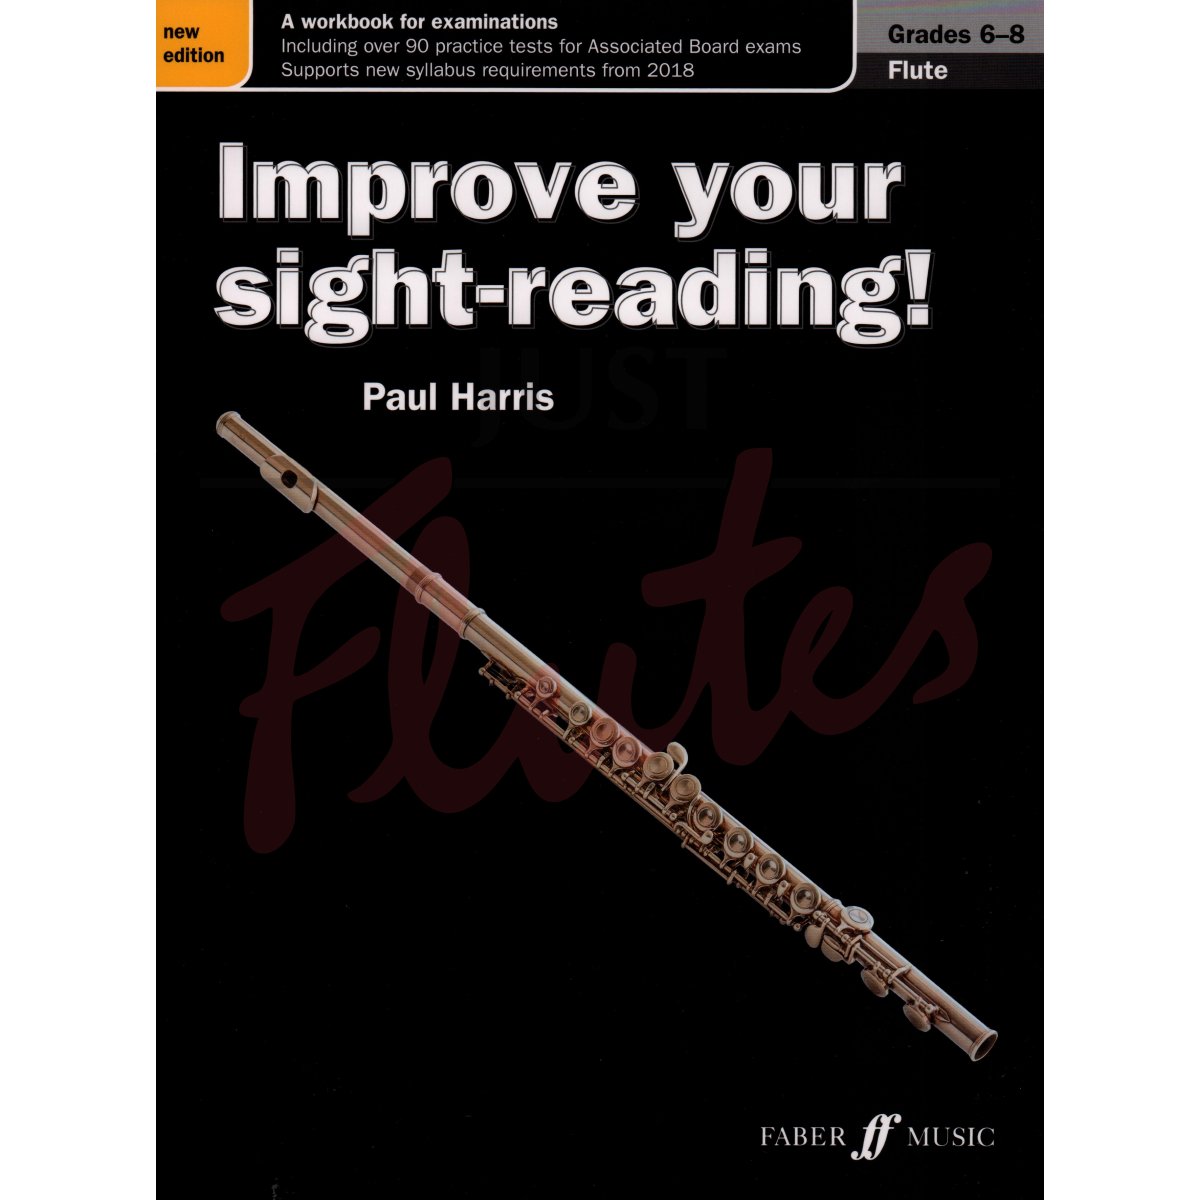 Improve Your Sight-Reading! [Flute] Grades 6-8